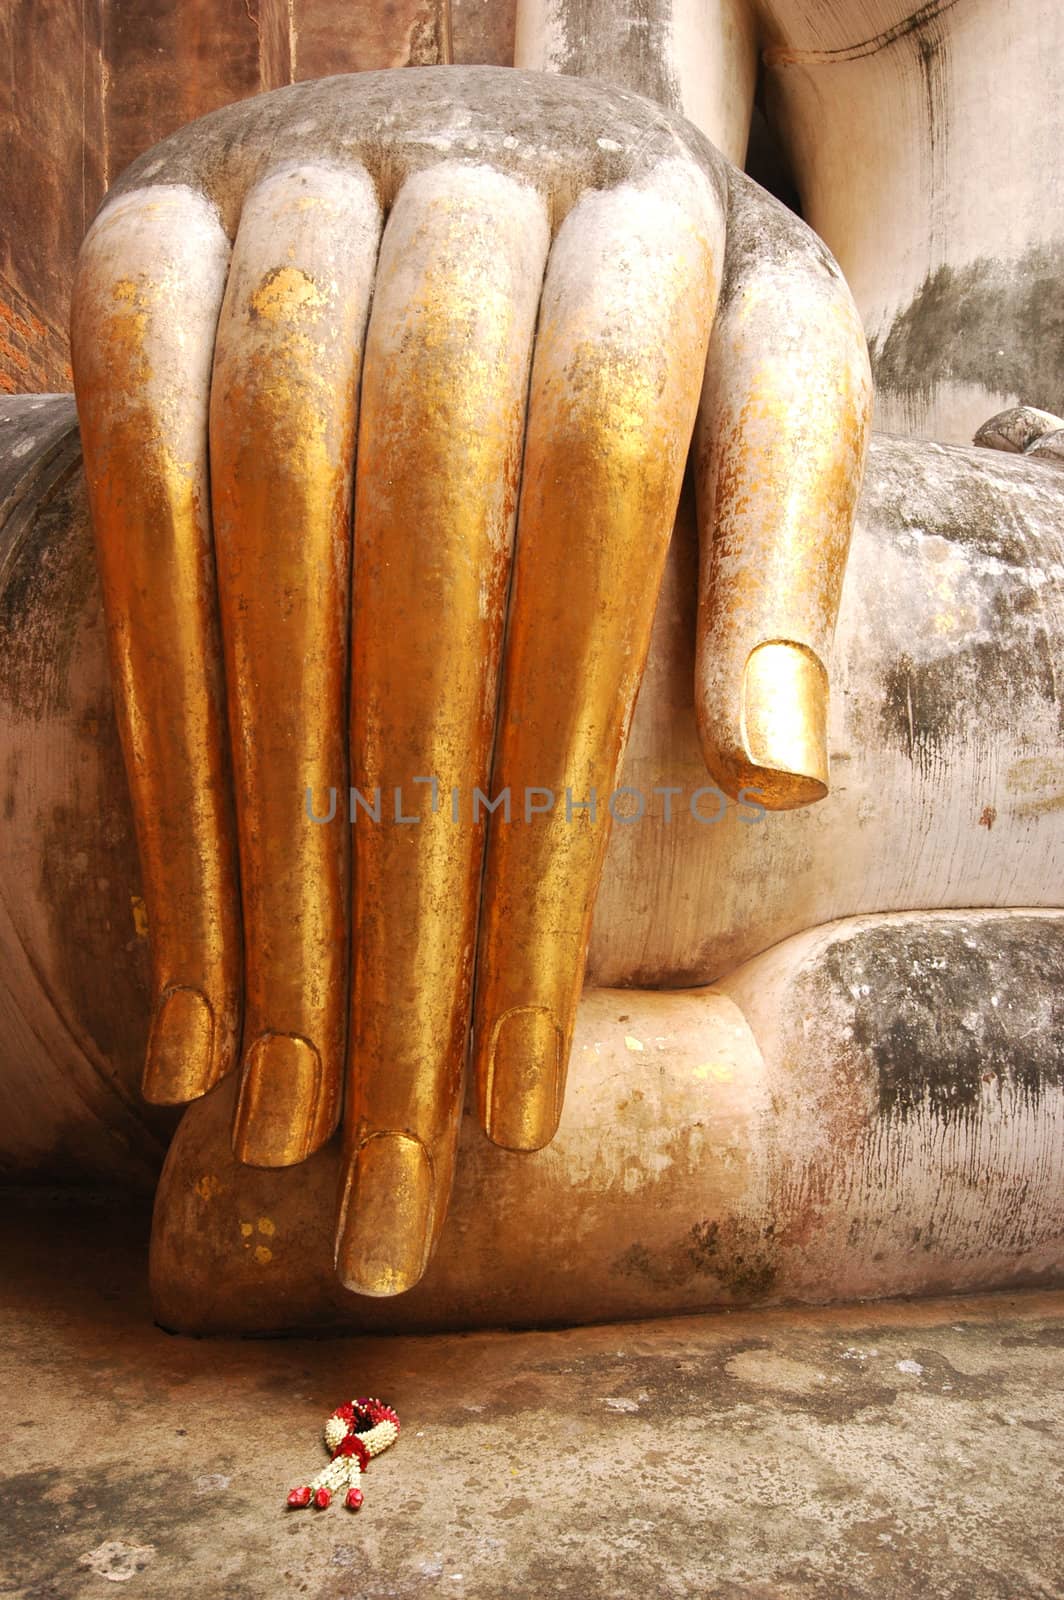 Big Buddha s Hand by buk_champ